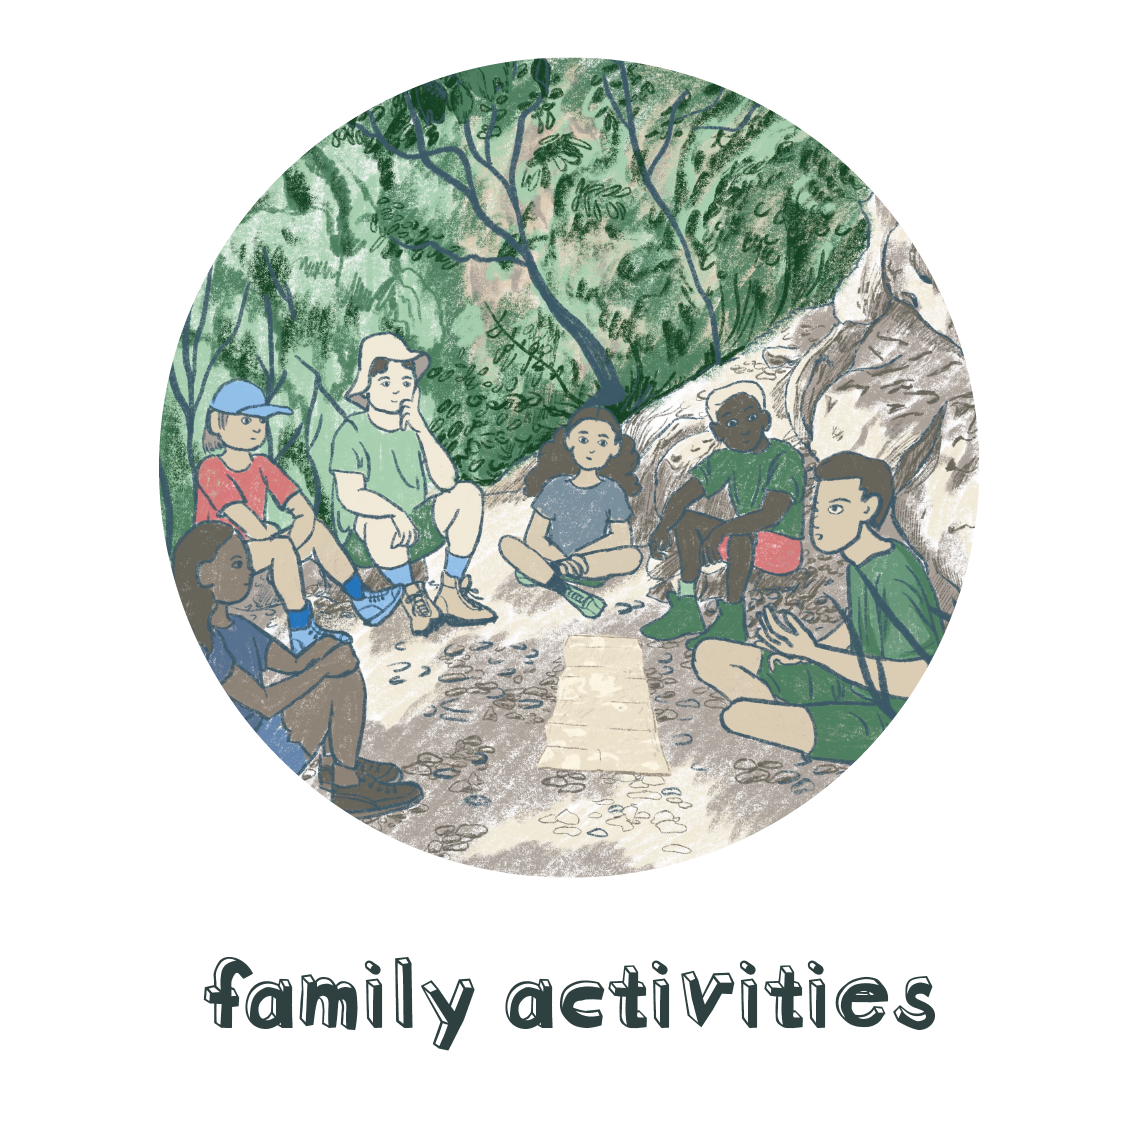 Family Activities